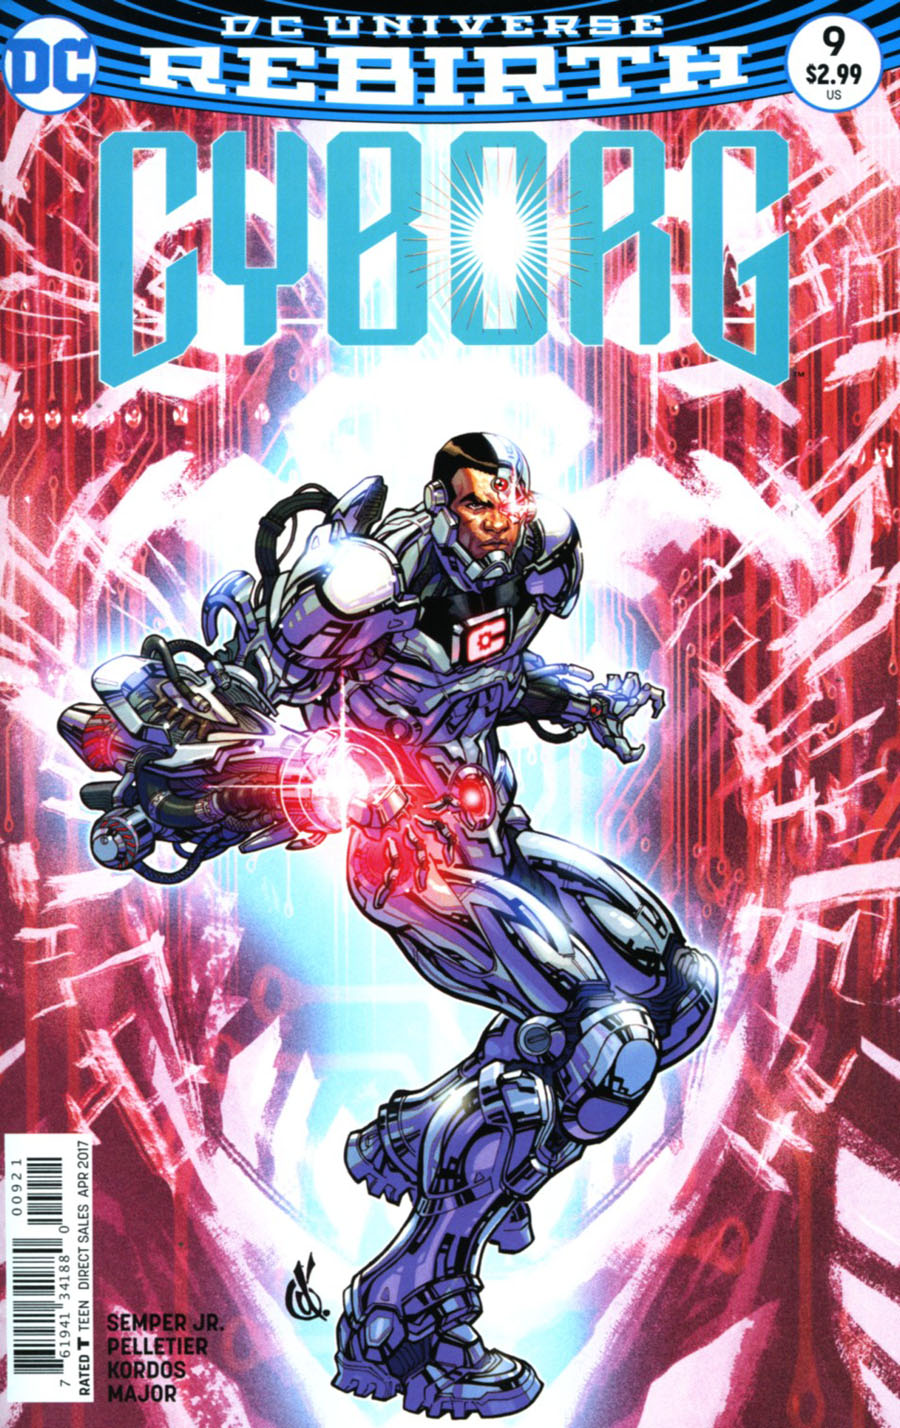 Cyborg Vol 2 #9 Cover B Variant Carlos DAnda Cover